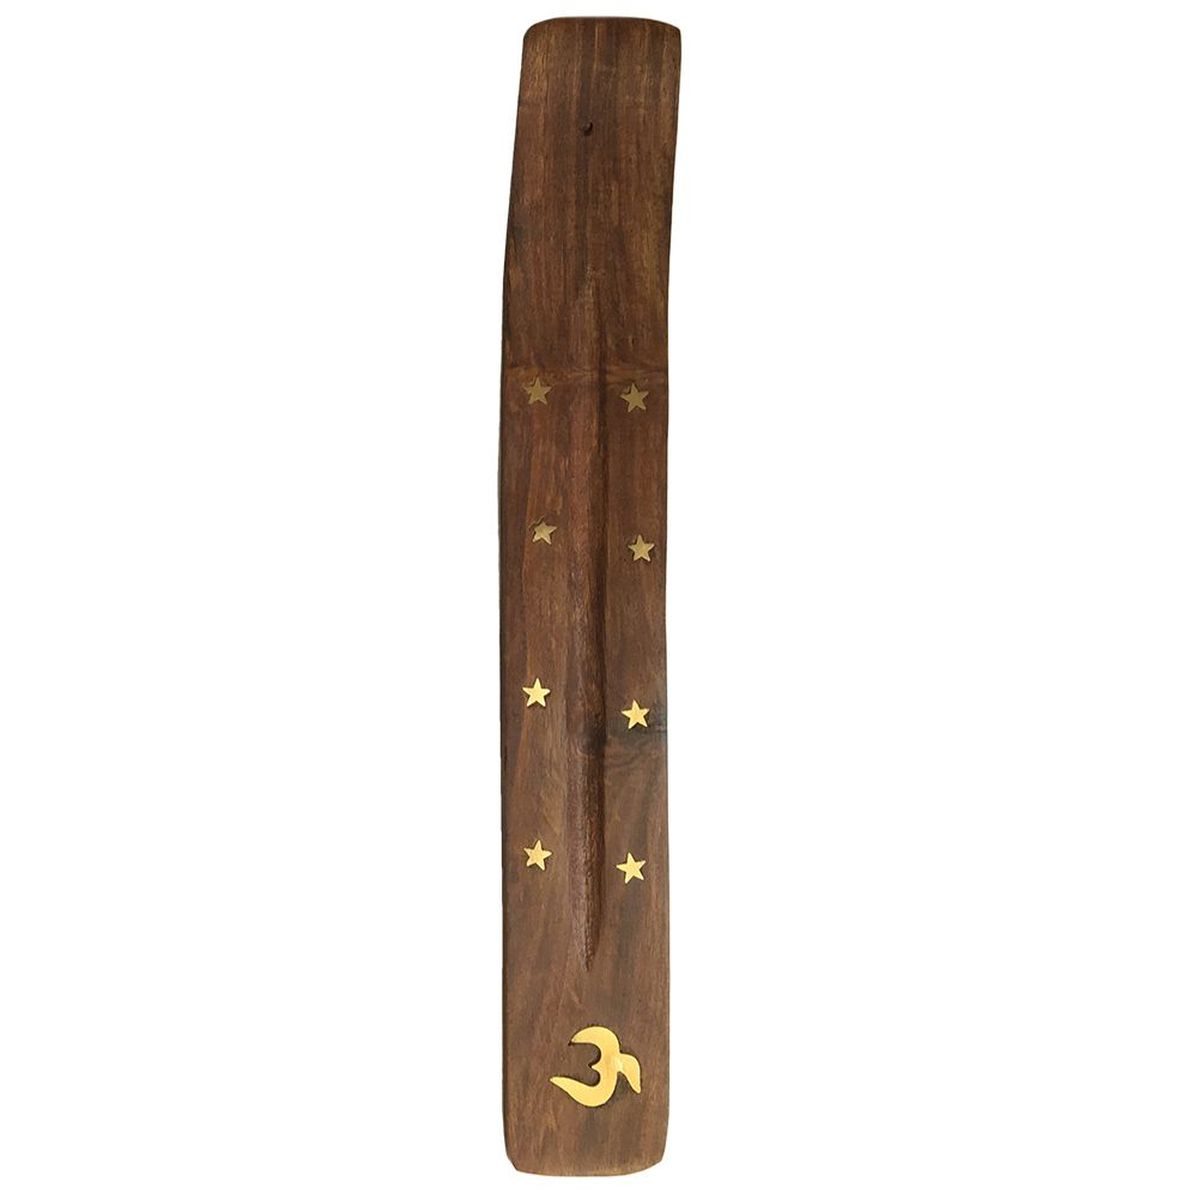 Incense stick holder - OHM